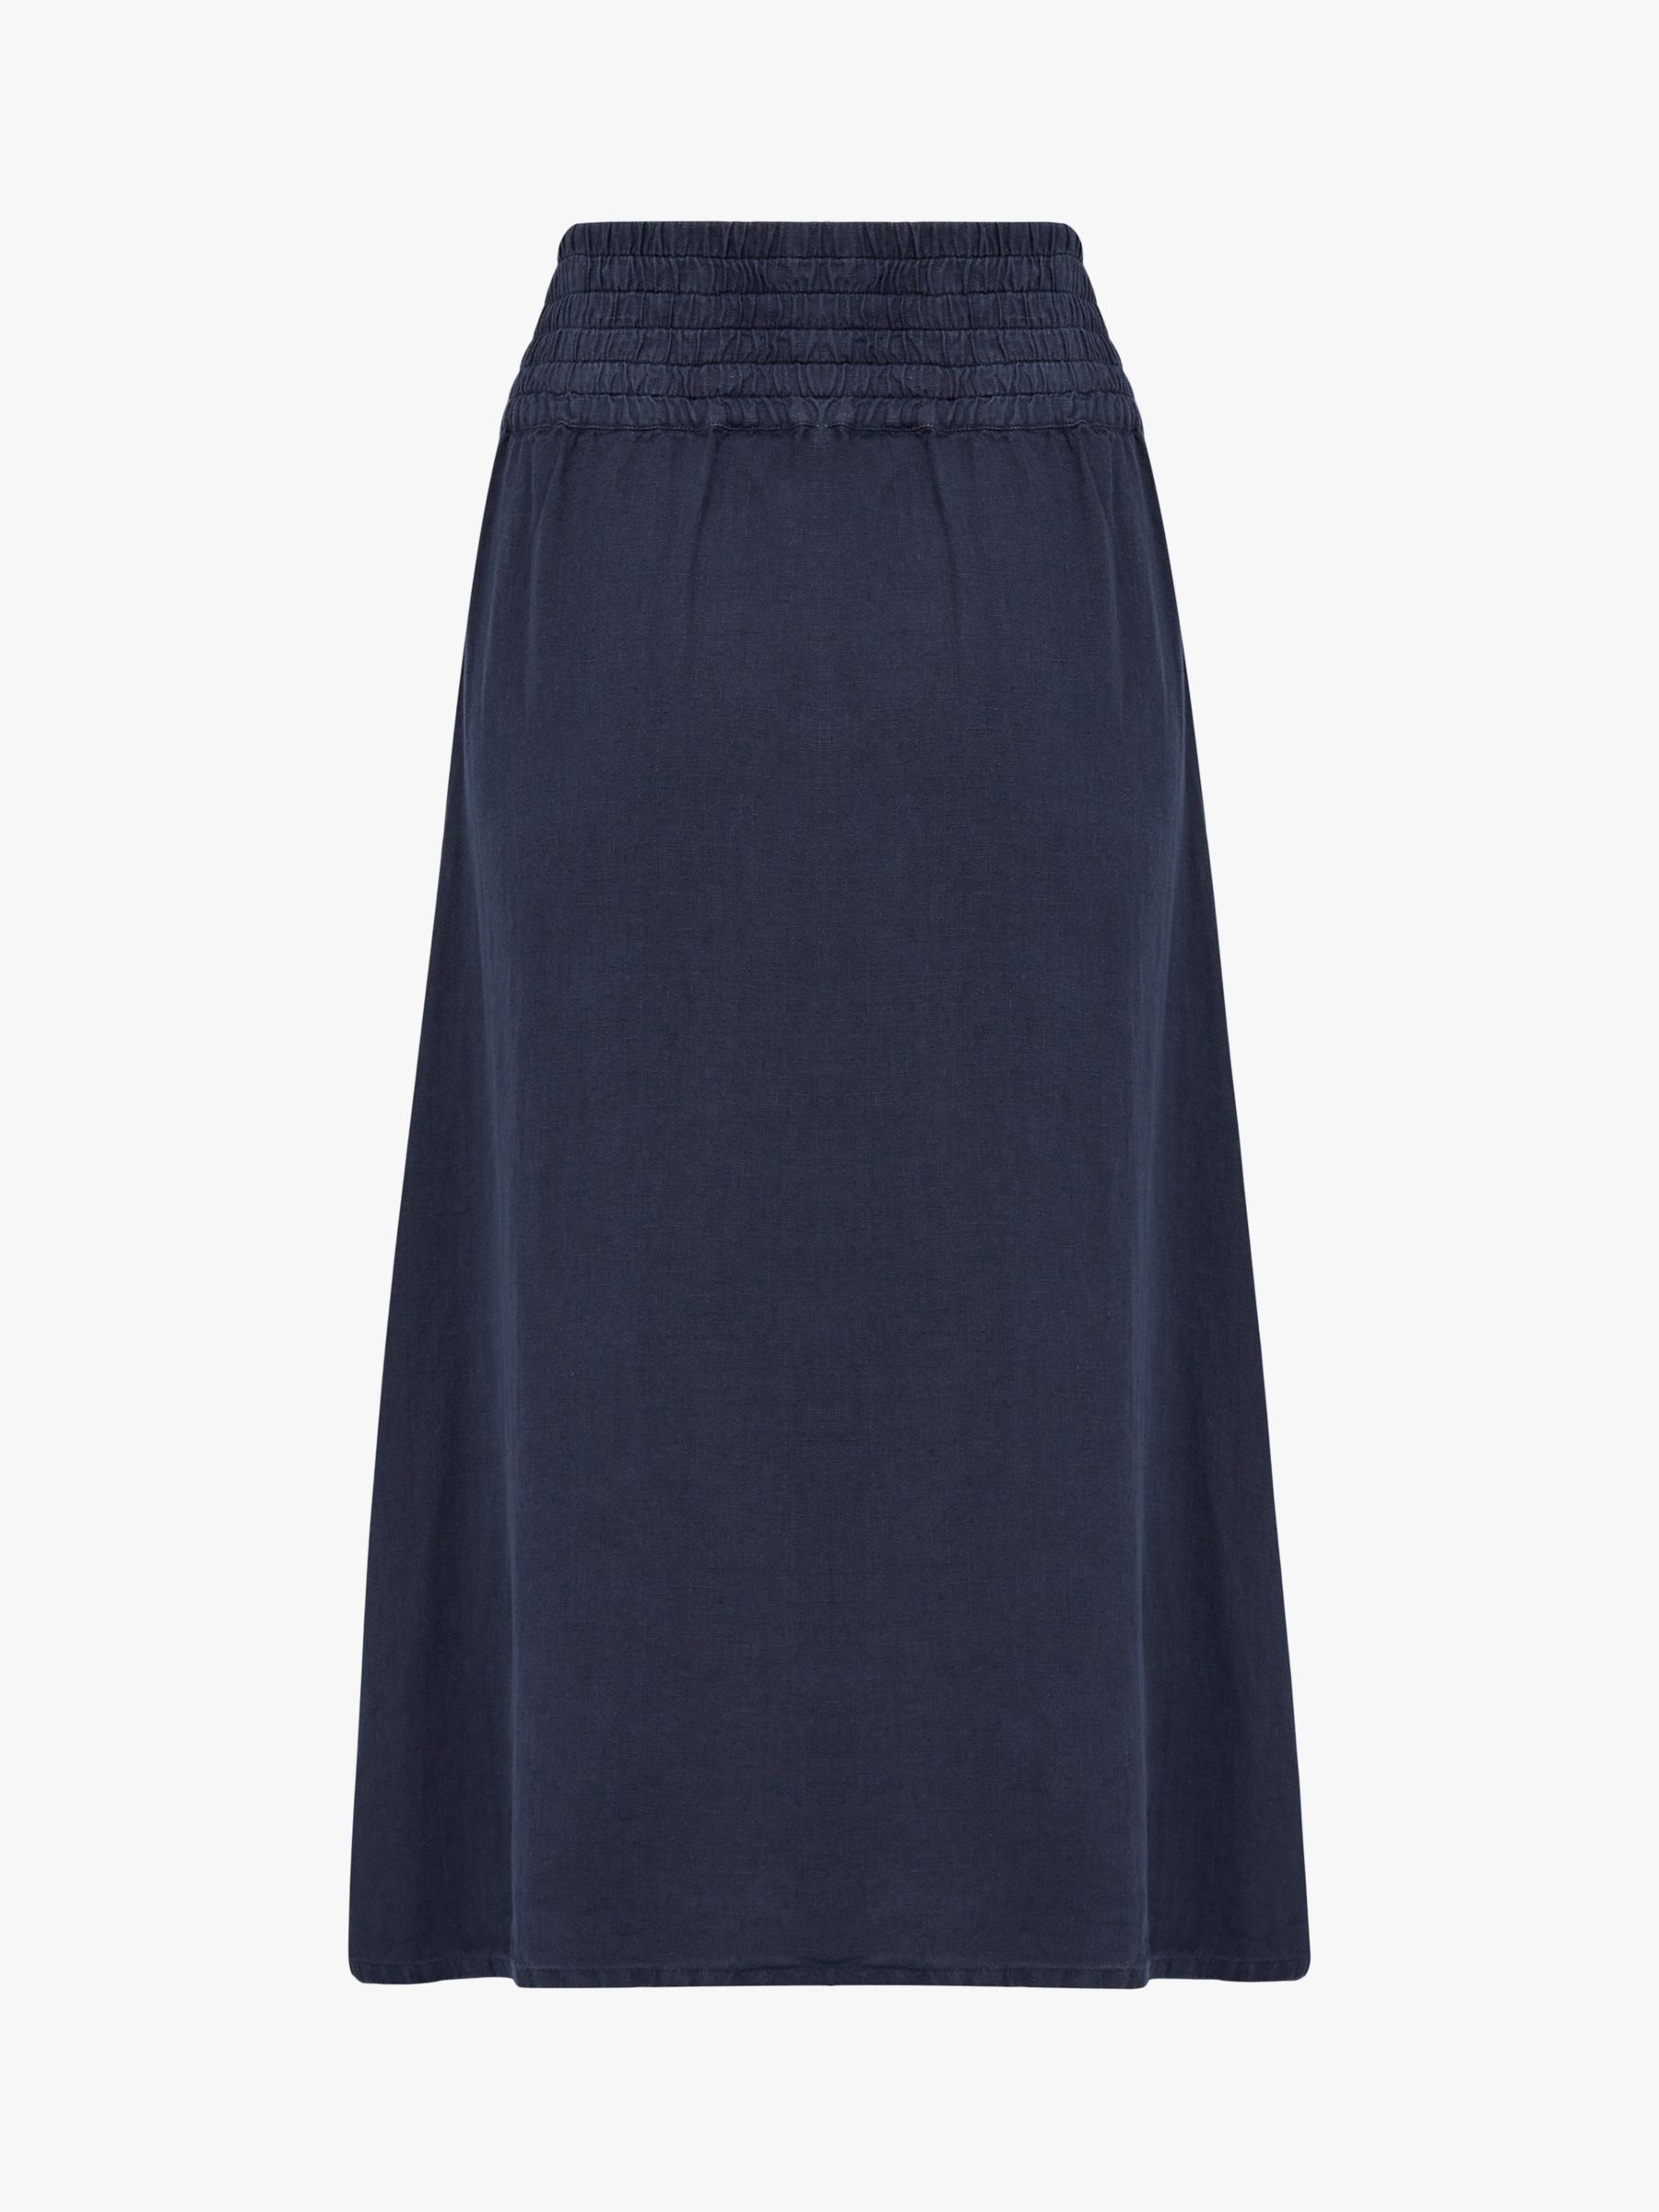 John Lewis & Partners Linen A-Line Midi Skirt, Navy, 18